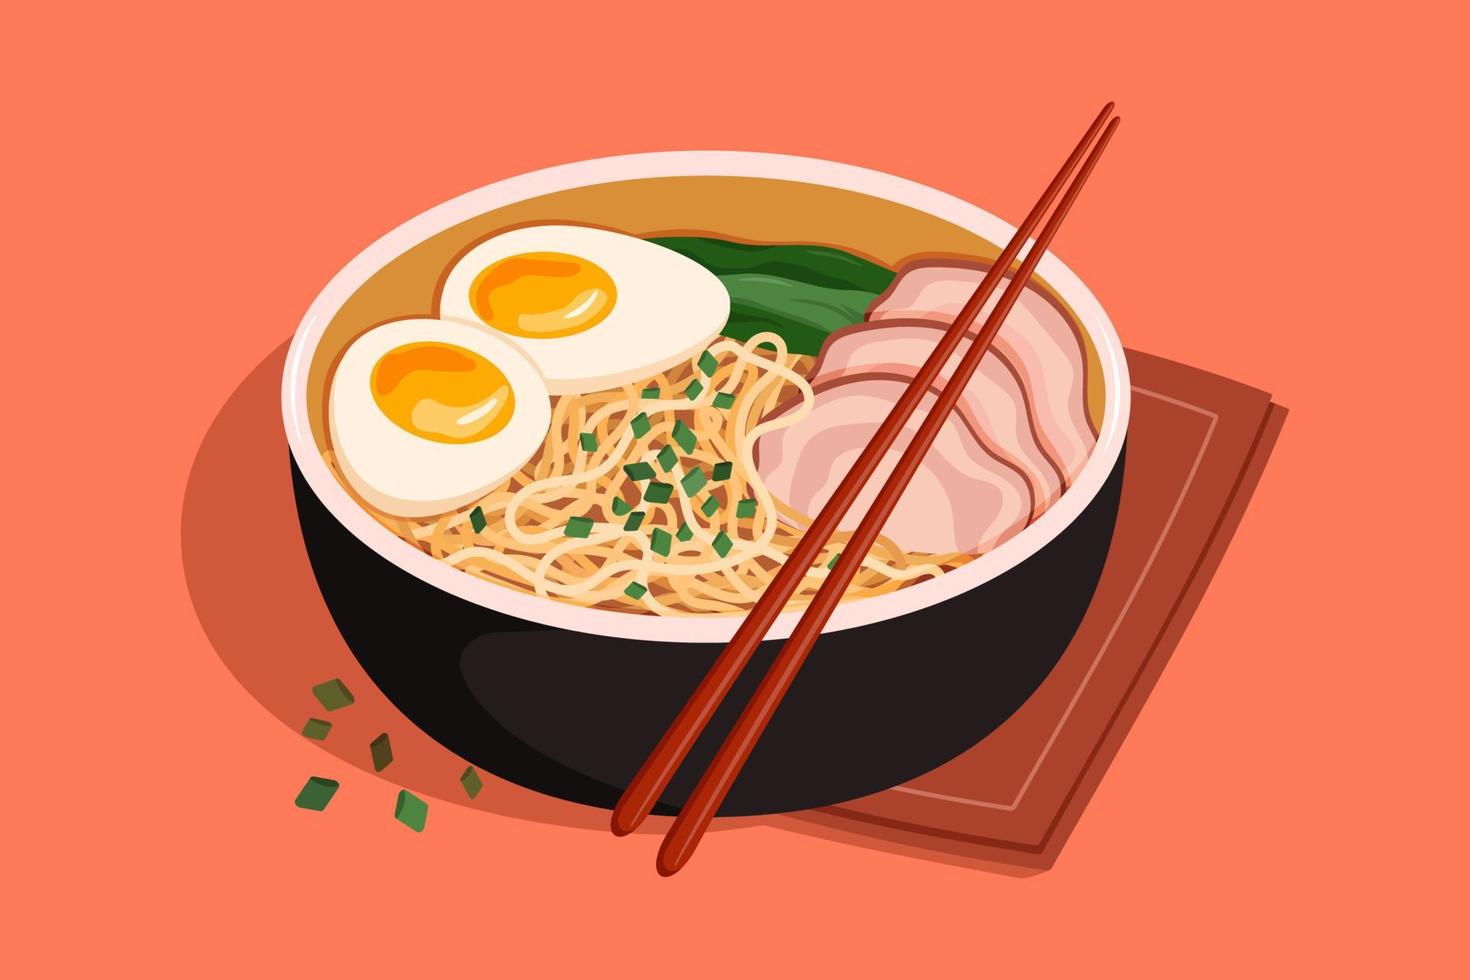 Bowl of ramen noodles with pork and egg. Asian cuisine. Vector illustration